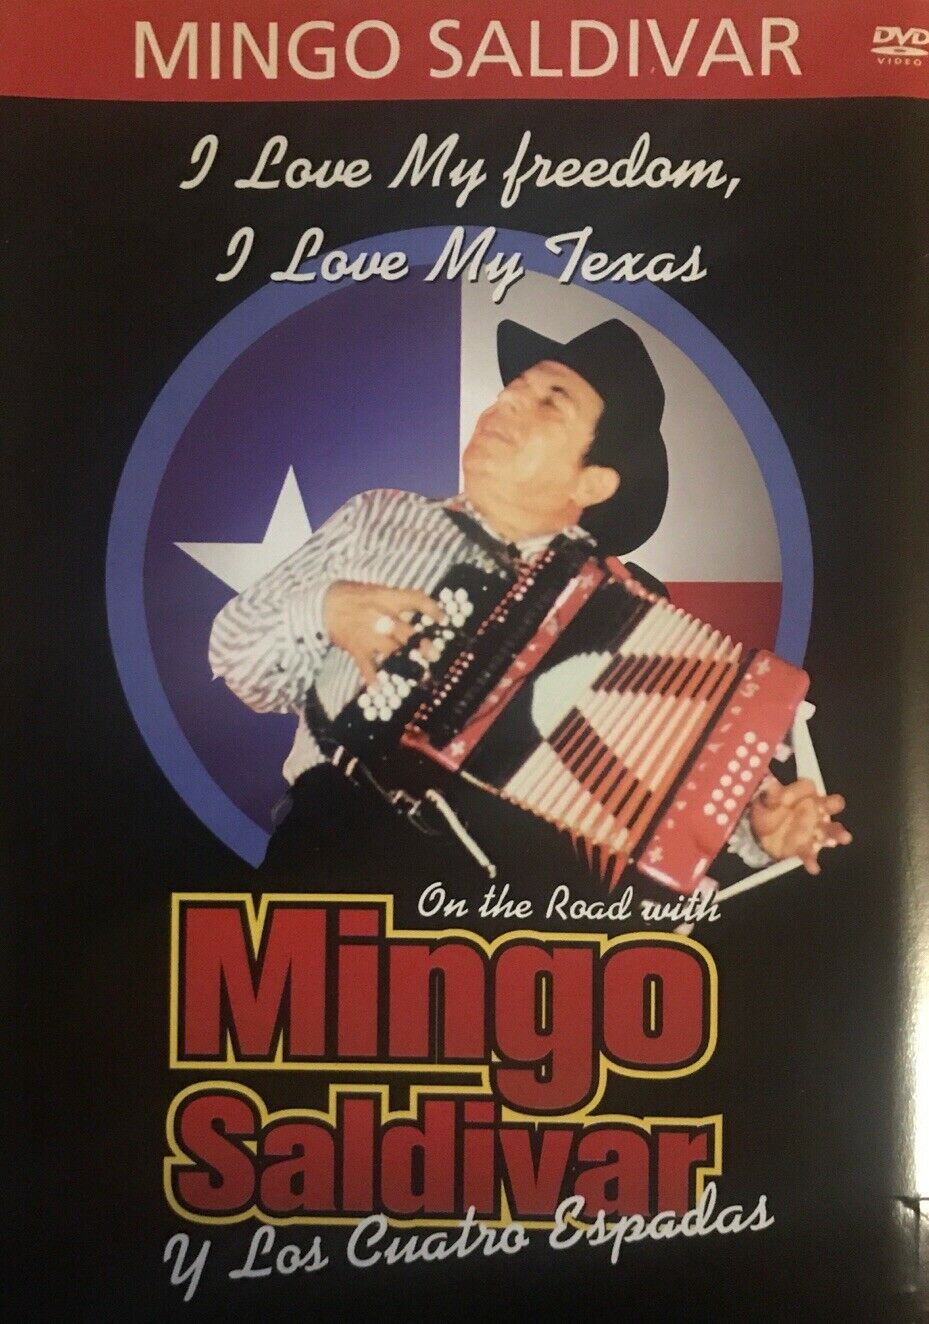 Mingo Saldivar y Los Cuatro Espadas - I Love My Freedom, I Love My Texas (DVD)